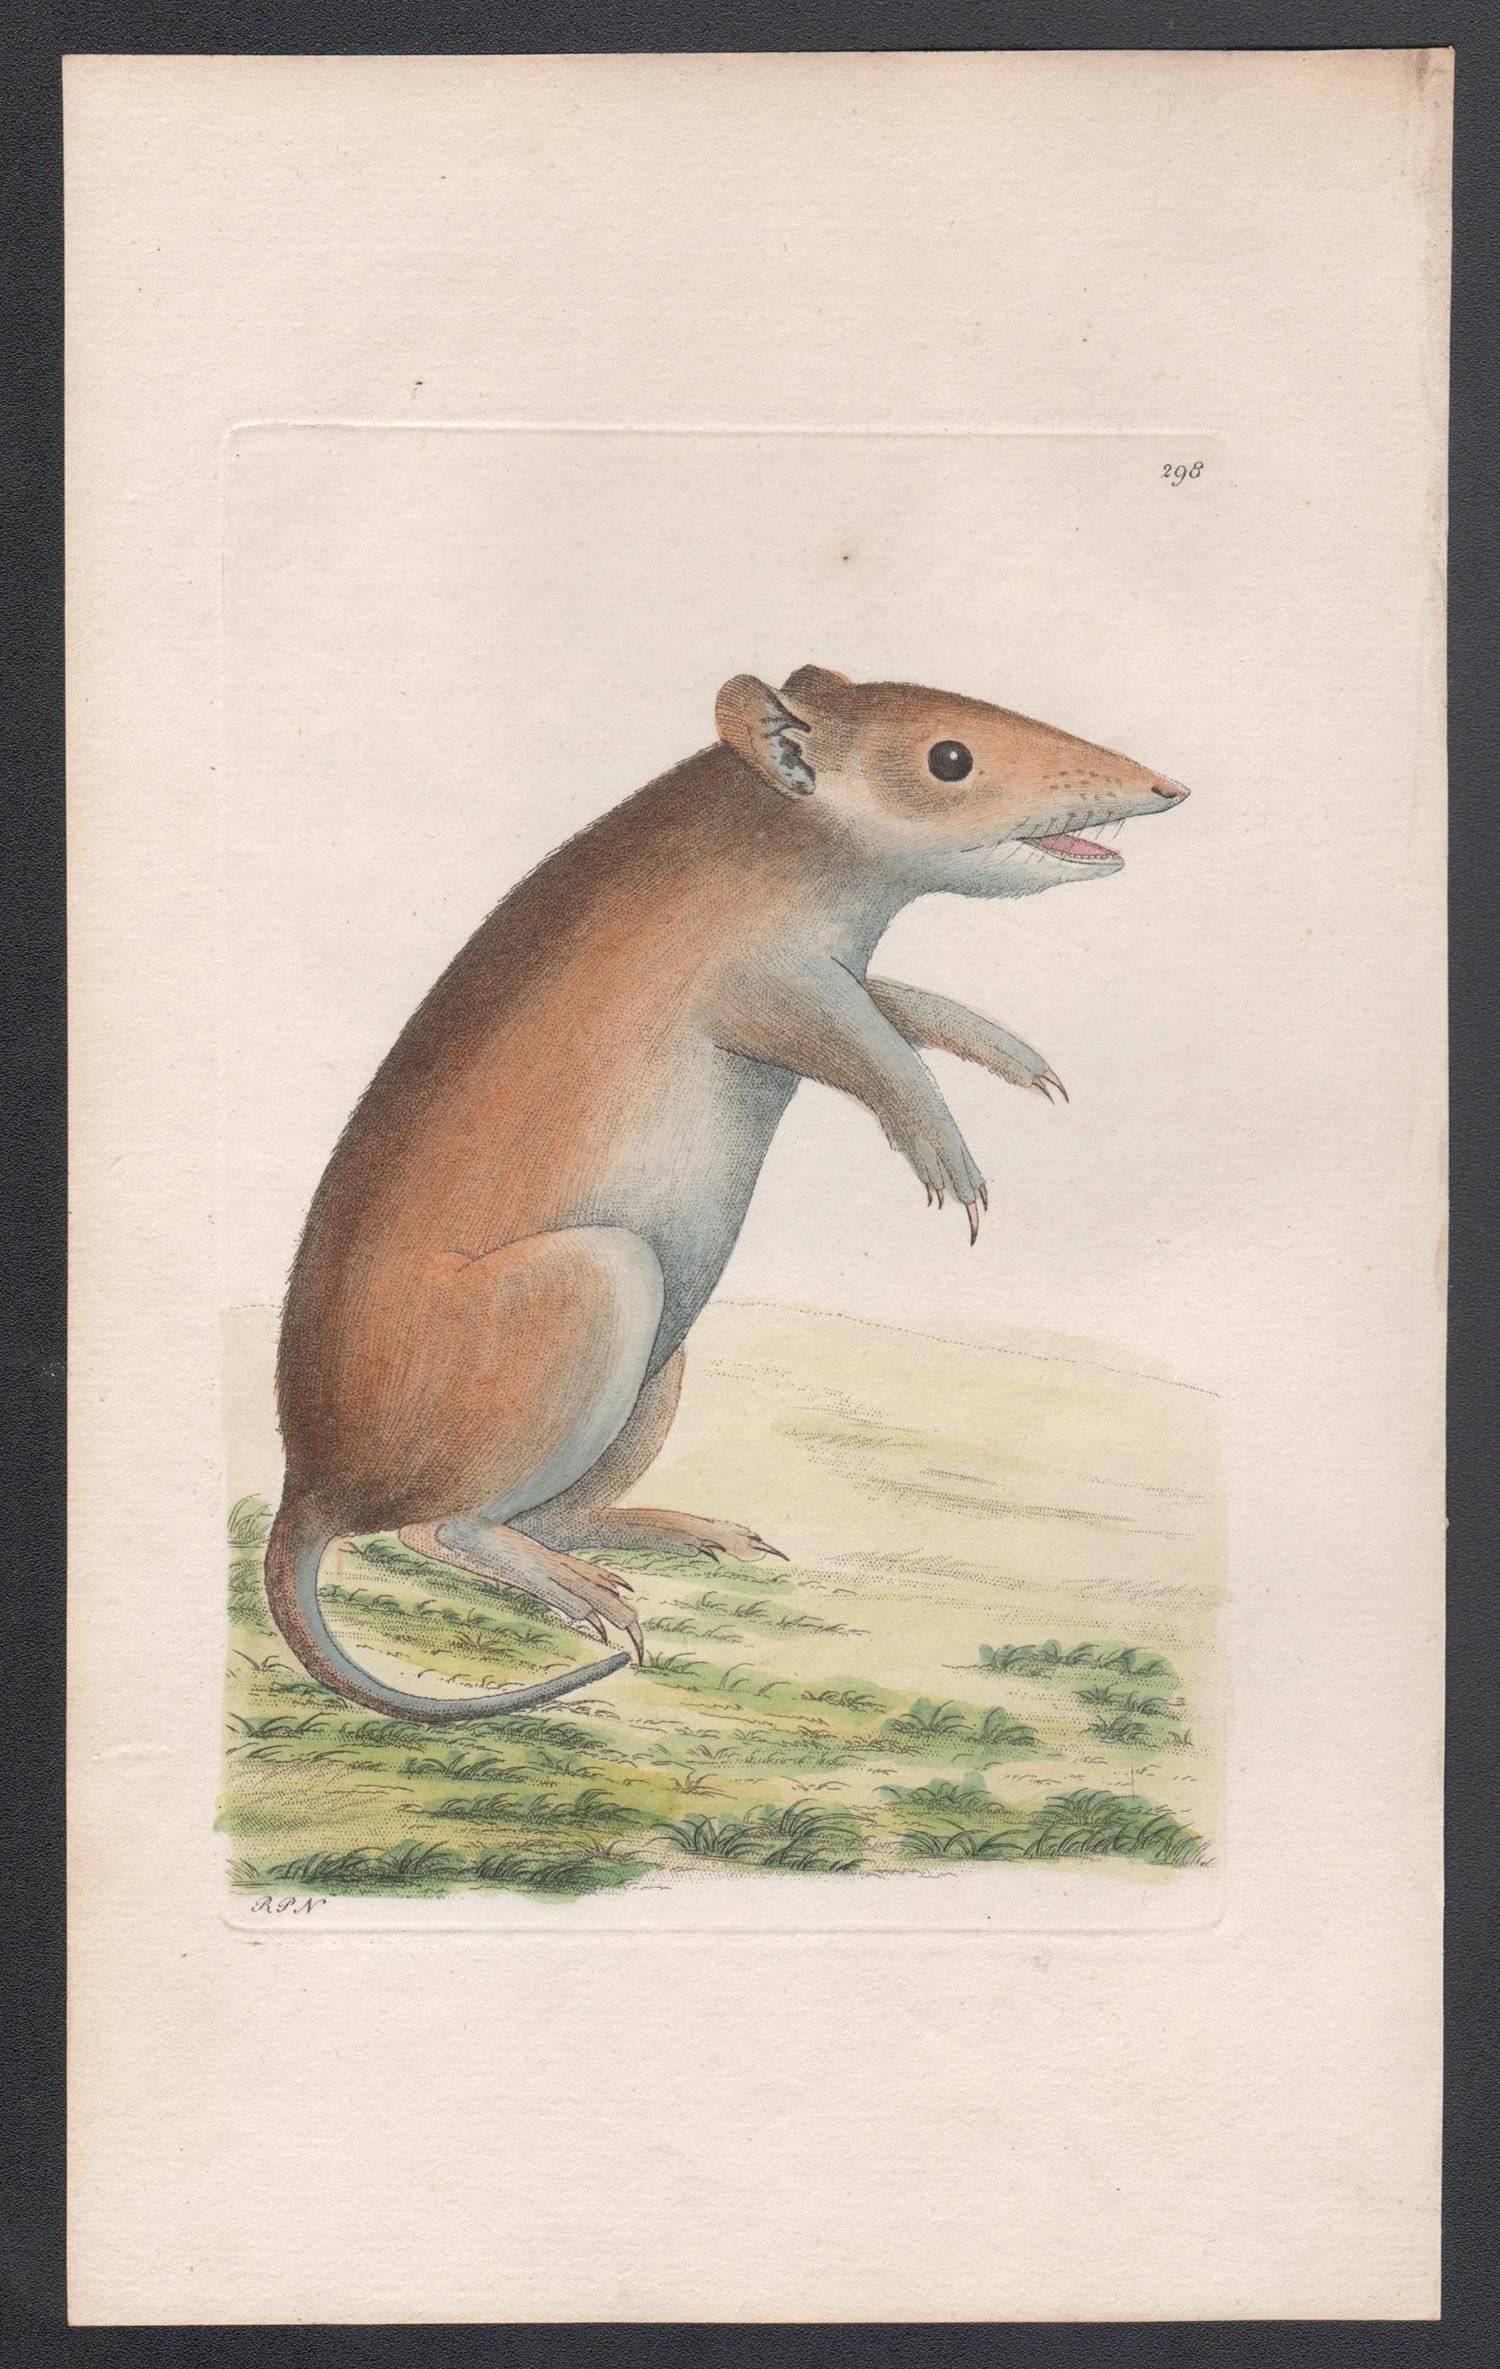 The Porculine Opossum (Bandicoot), Australie, gravure, 1795 - Print de Richard Polydore Nodder